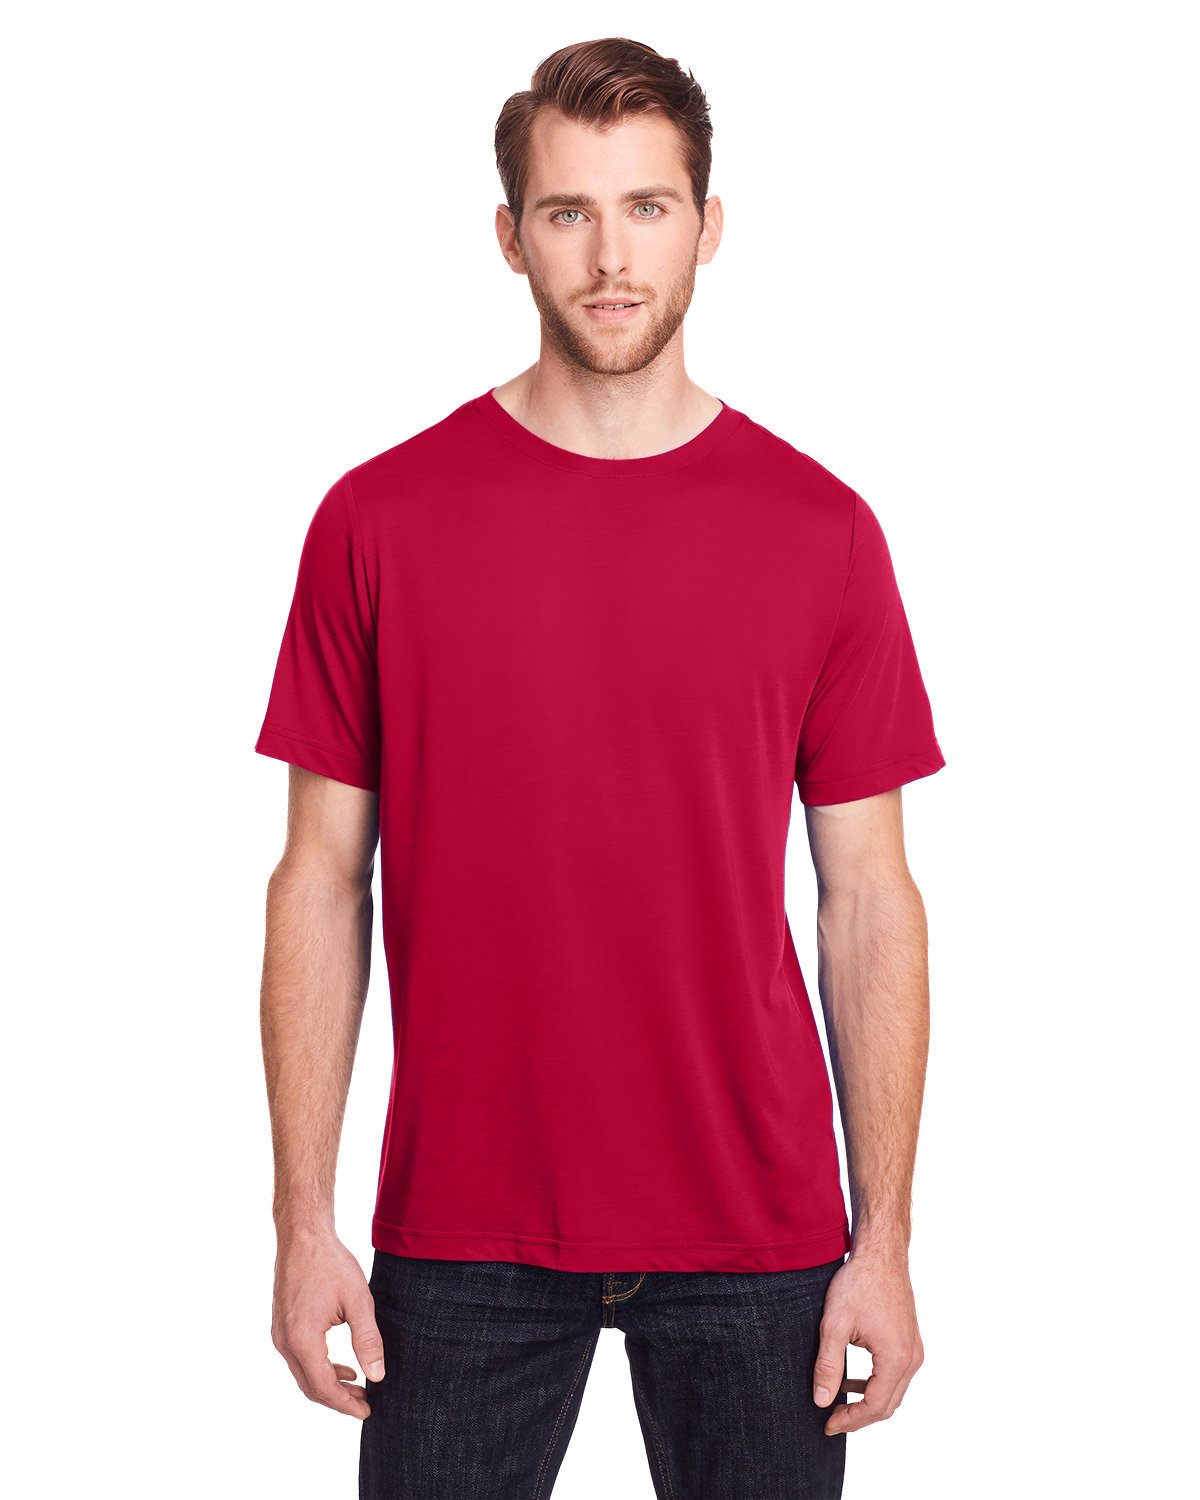 Core 365 Adult Fusion ChromaSoft Performance T-Shirt CLASSIC RED 